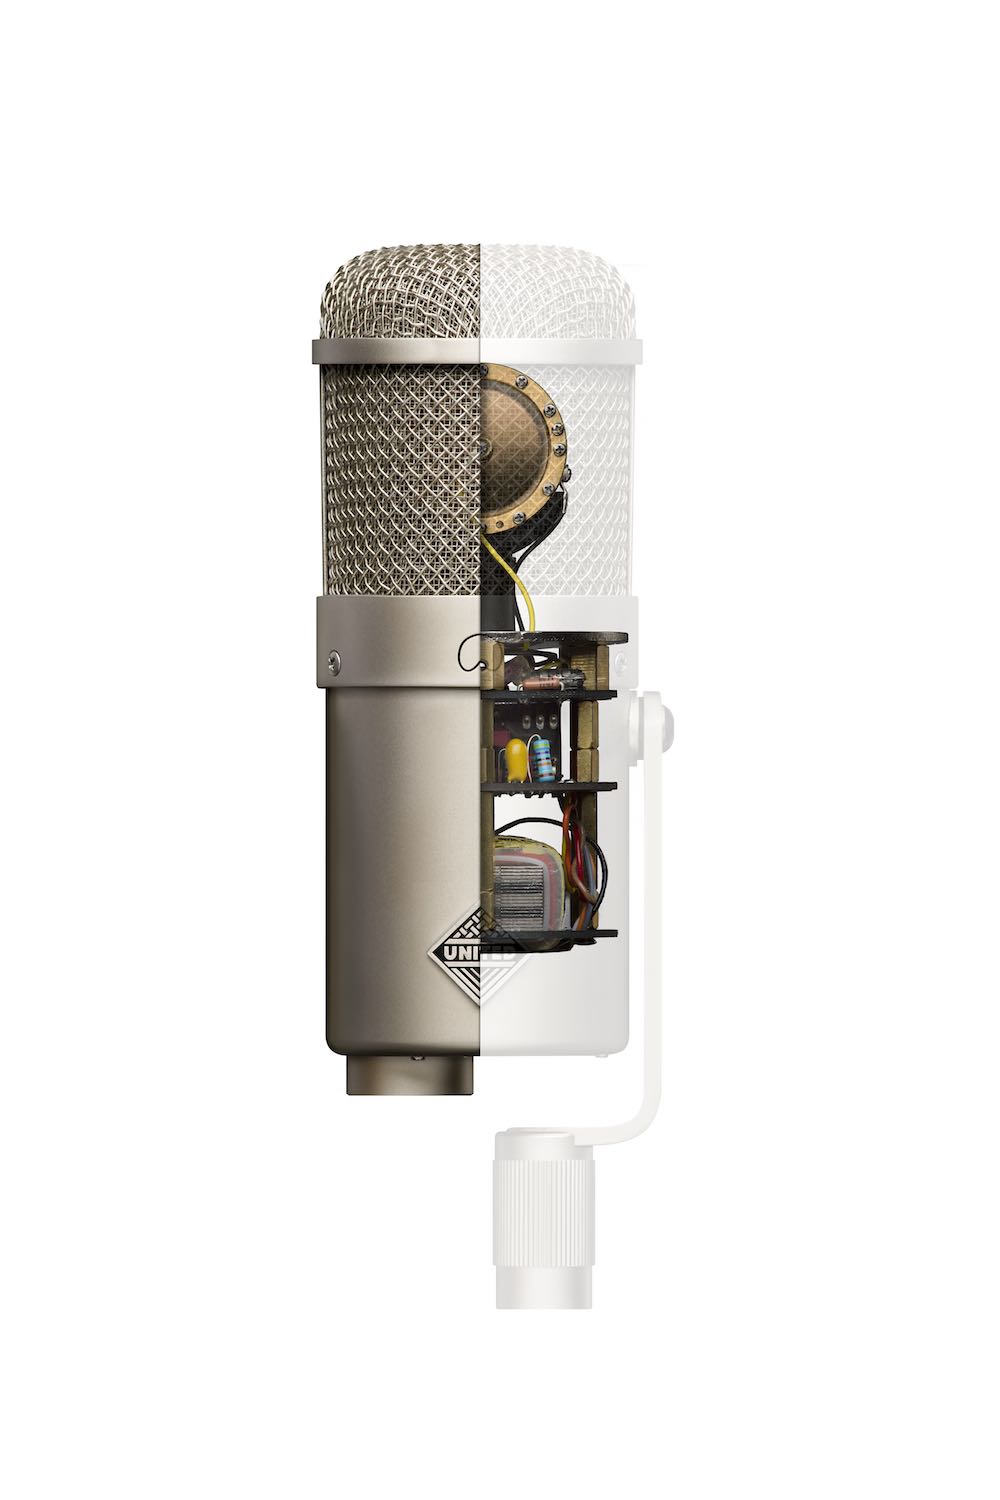 United UT FET47 mic hardware analog studio pro project home audiofader